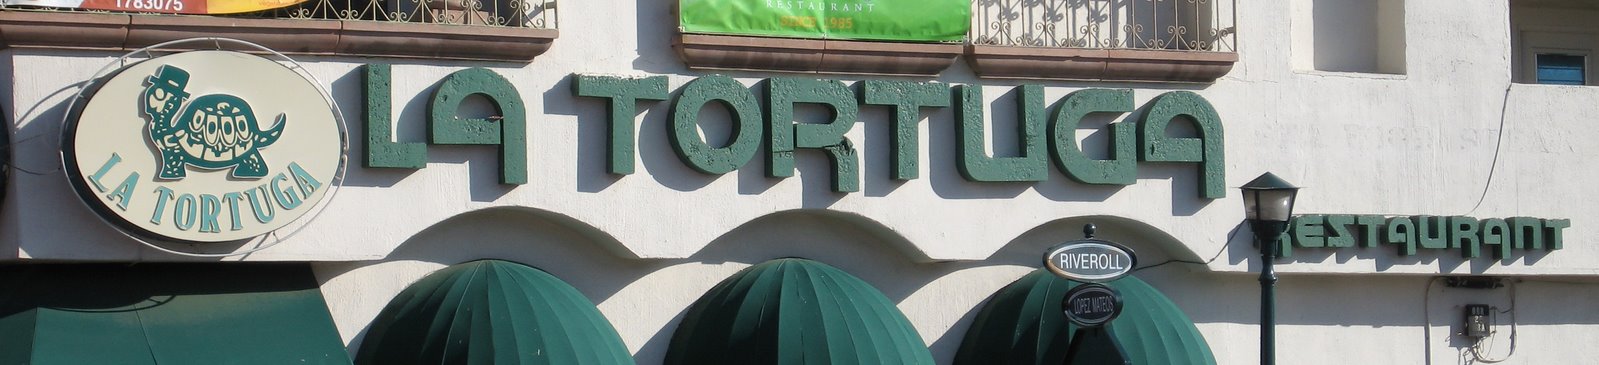 [Mexico+-+La+Tortuga+Resturaunt.jpg]